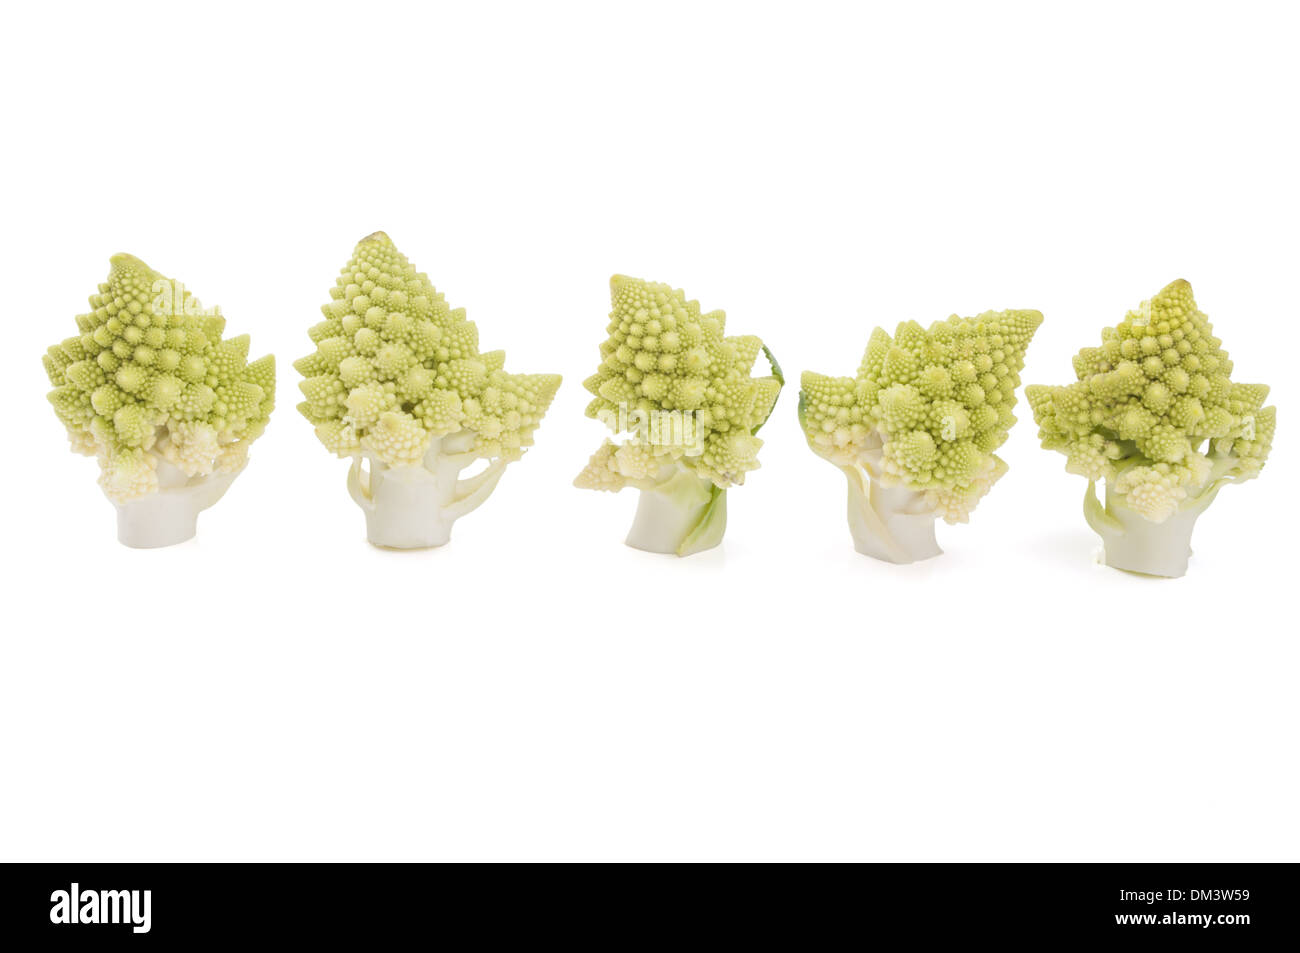 Freshly cut romanesco broccoli (Brassica oleracea) pieces on a white background Stock Photo